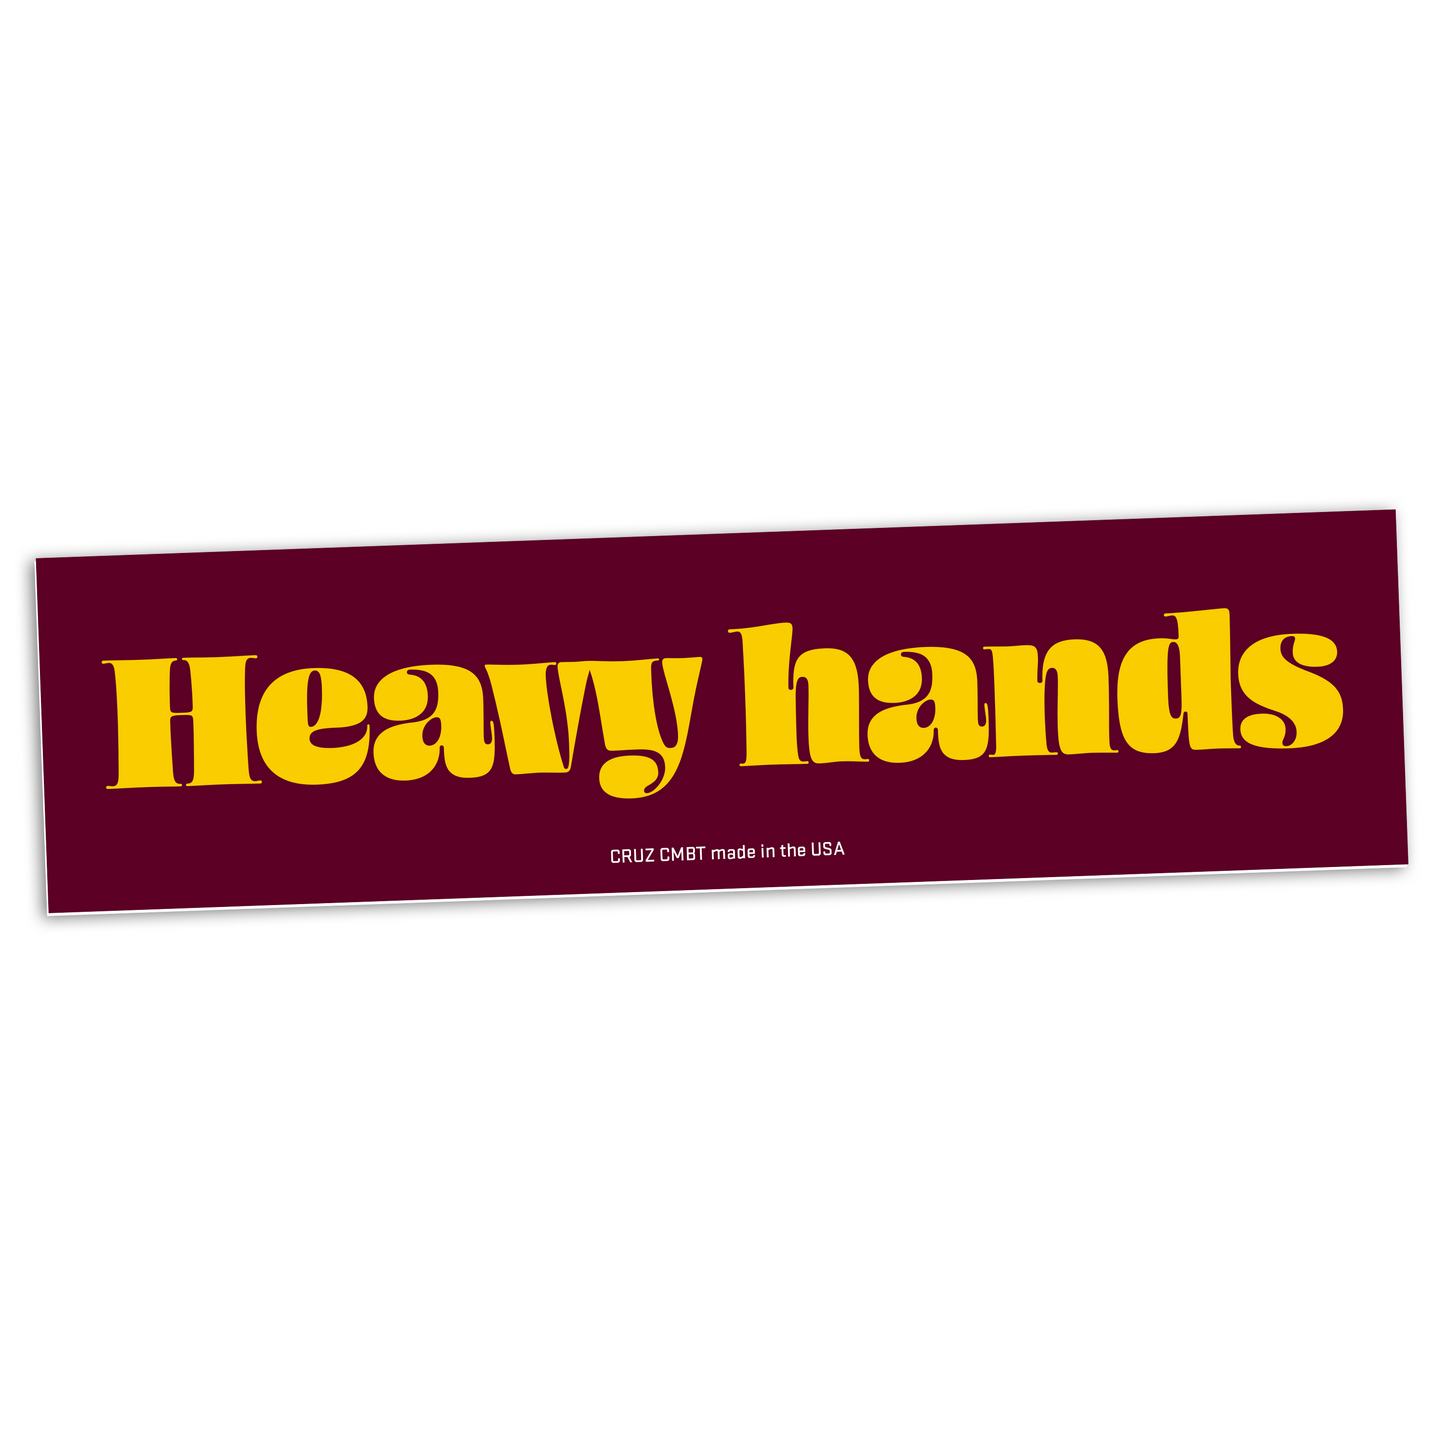 Heavy Hands bumper sticker